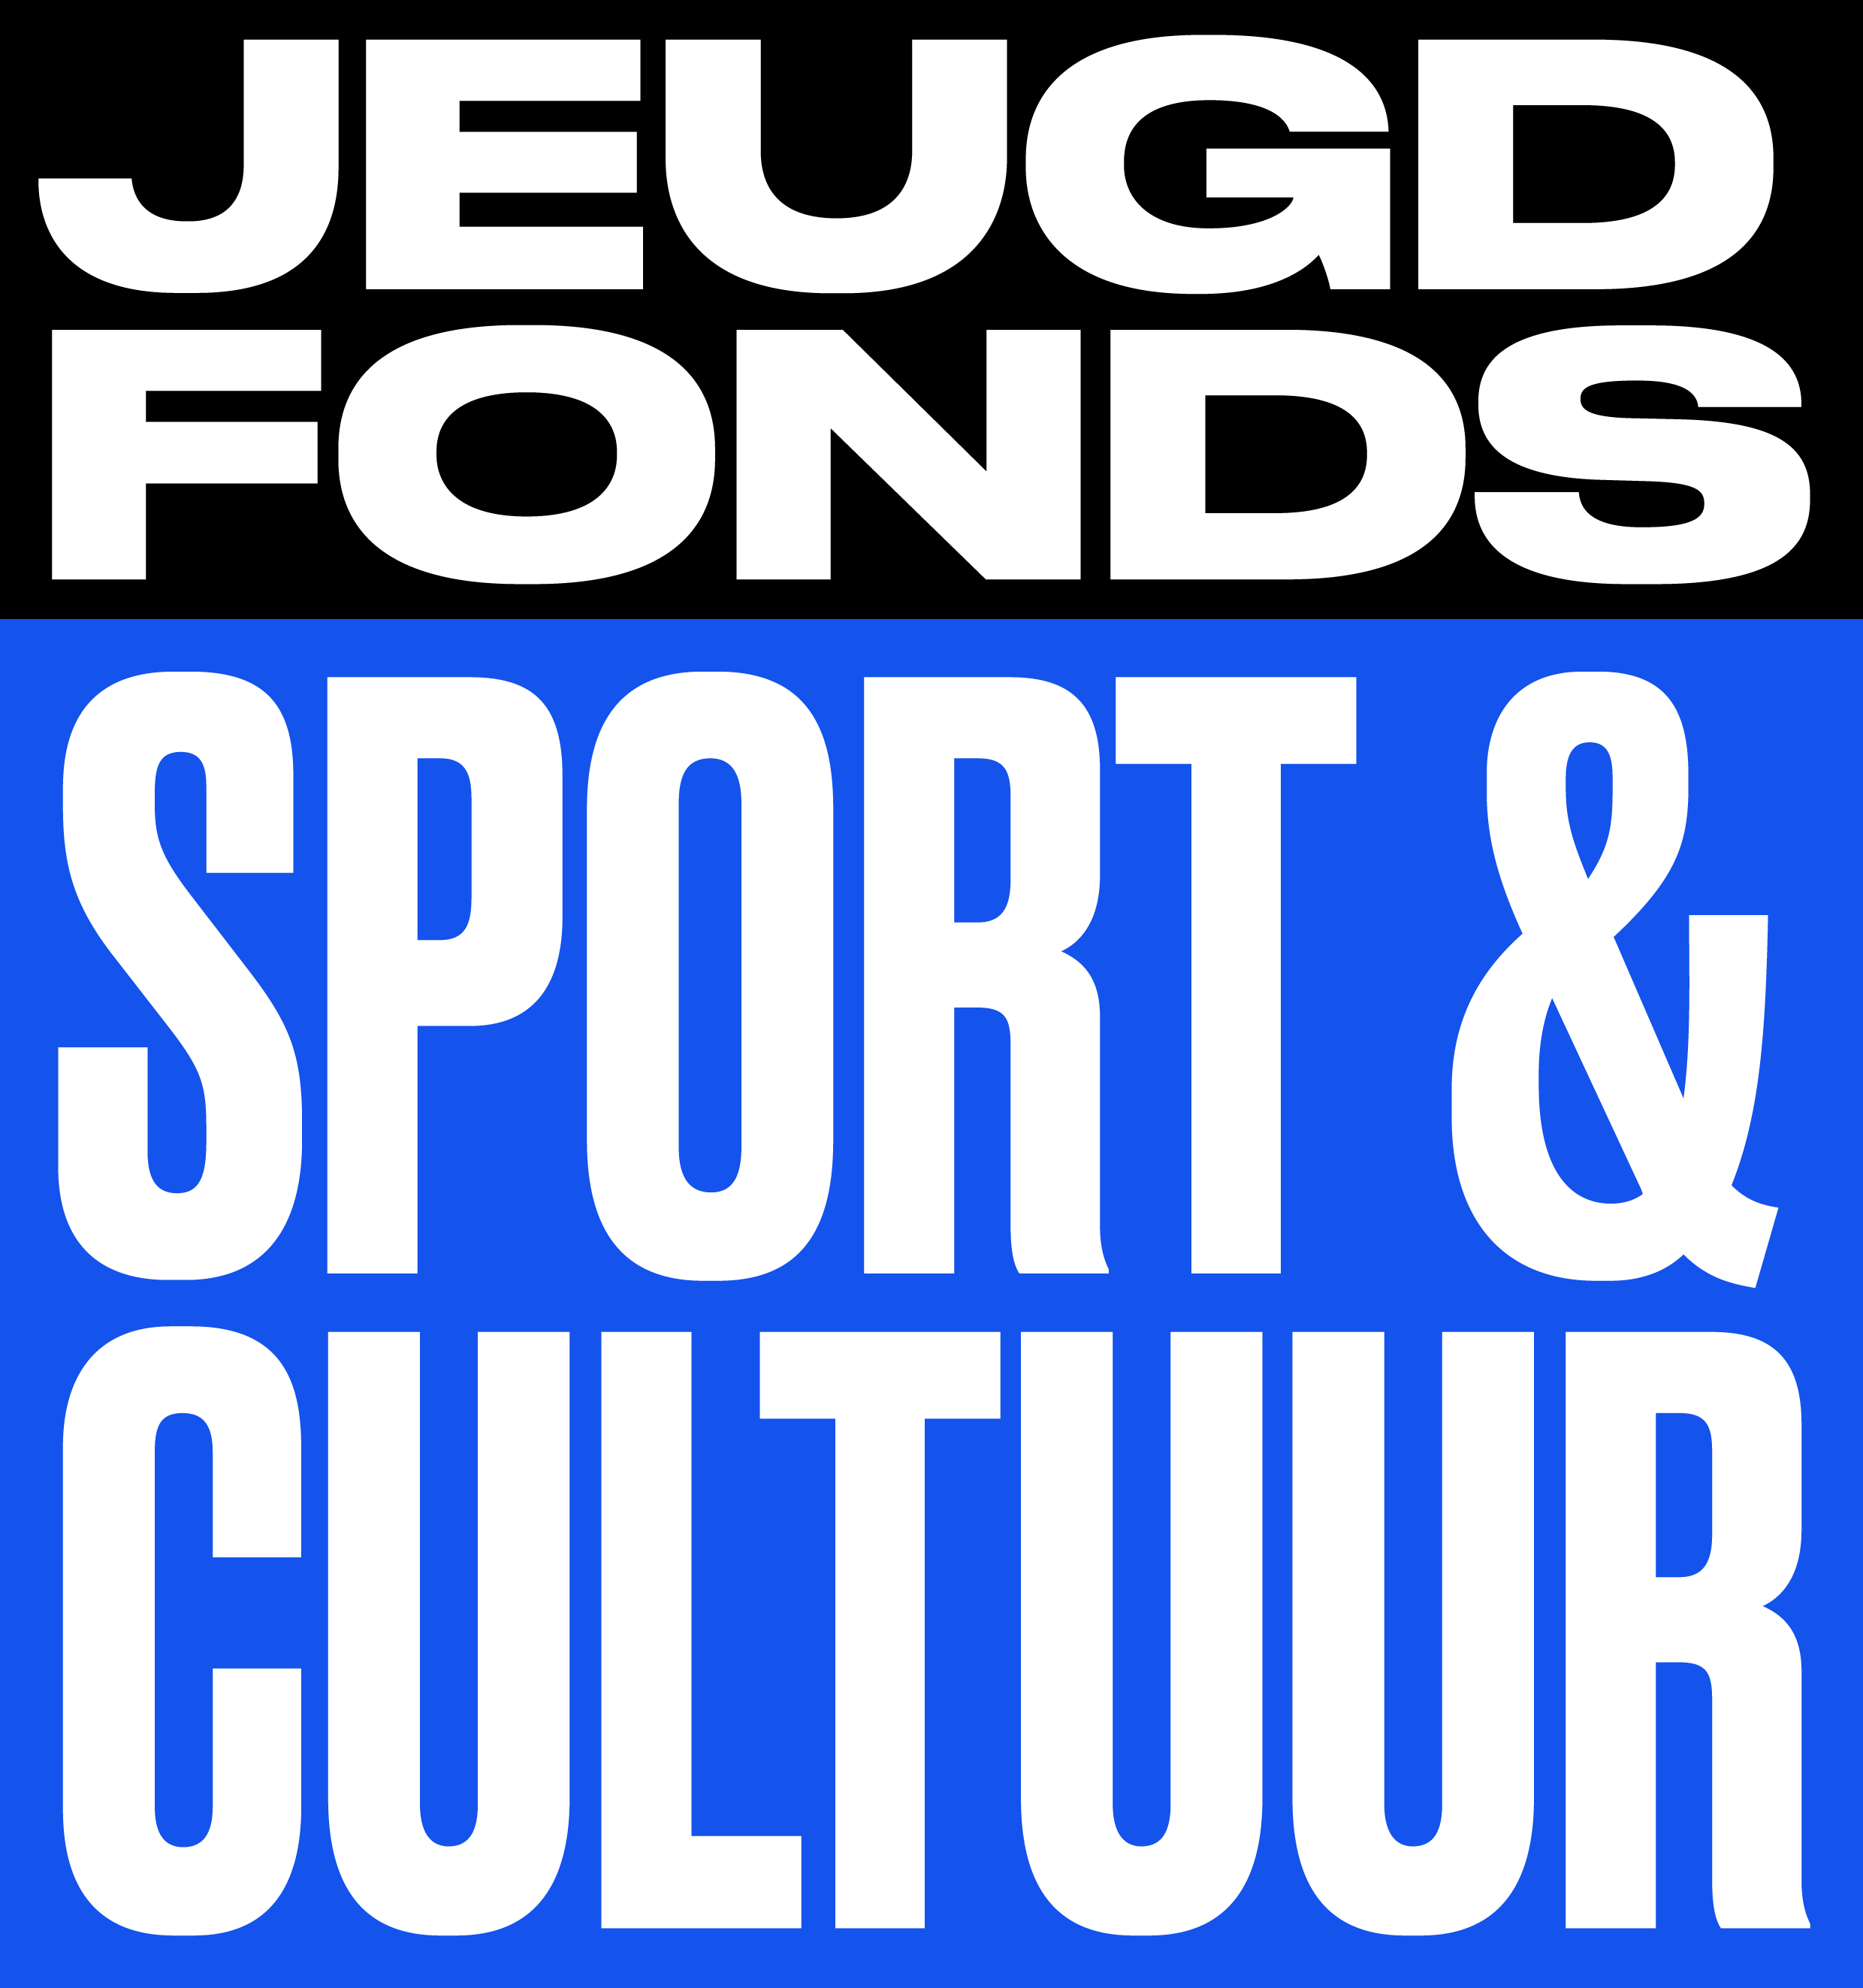 Het Jeugdfonds Sport & Cultuur helpt!